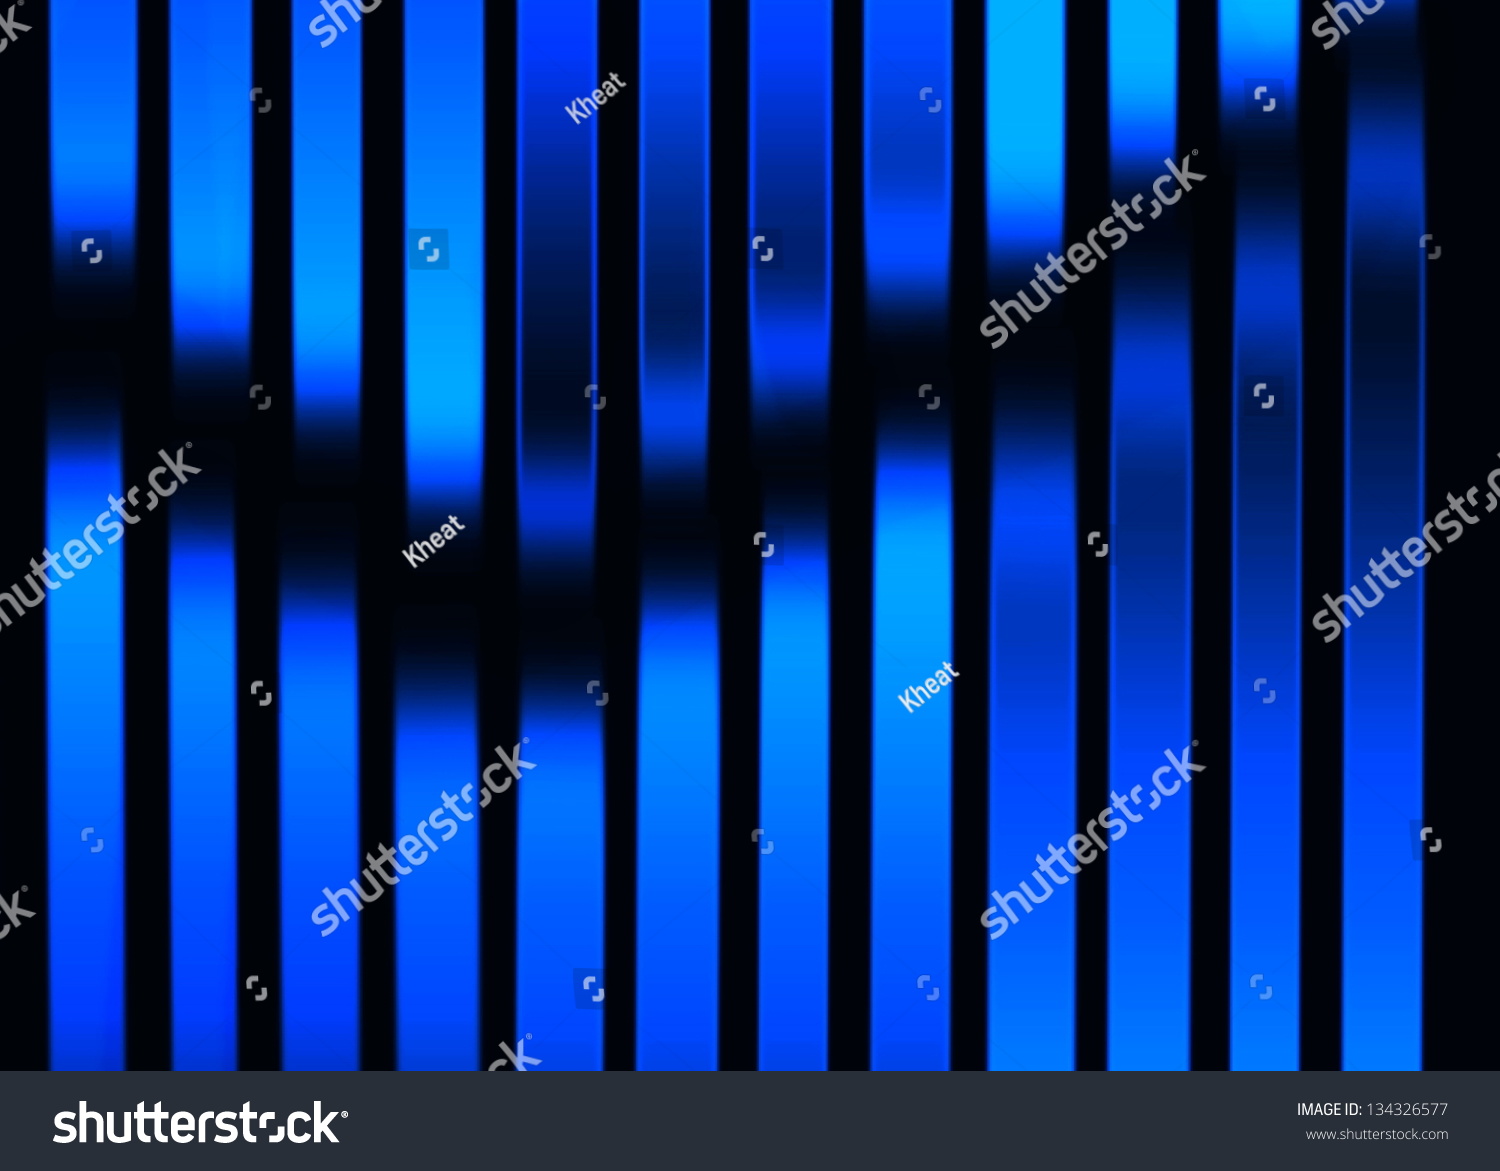 Abstract Bar Blue On Dark Background Stock Photo 134326577 : Shutterstock